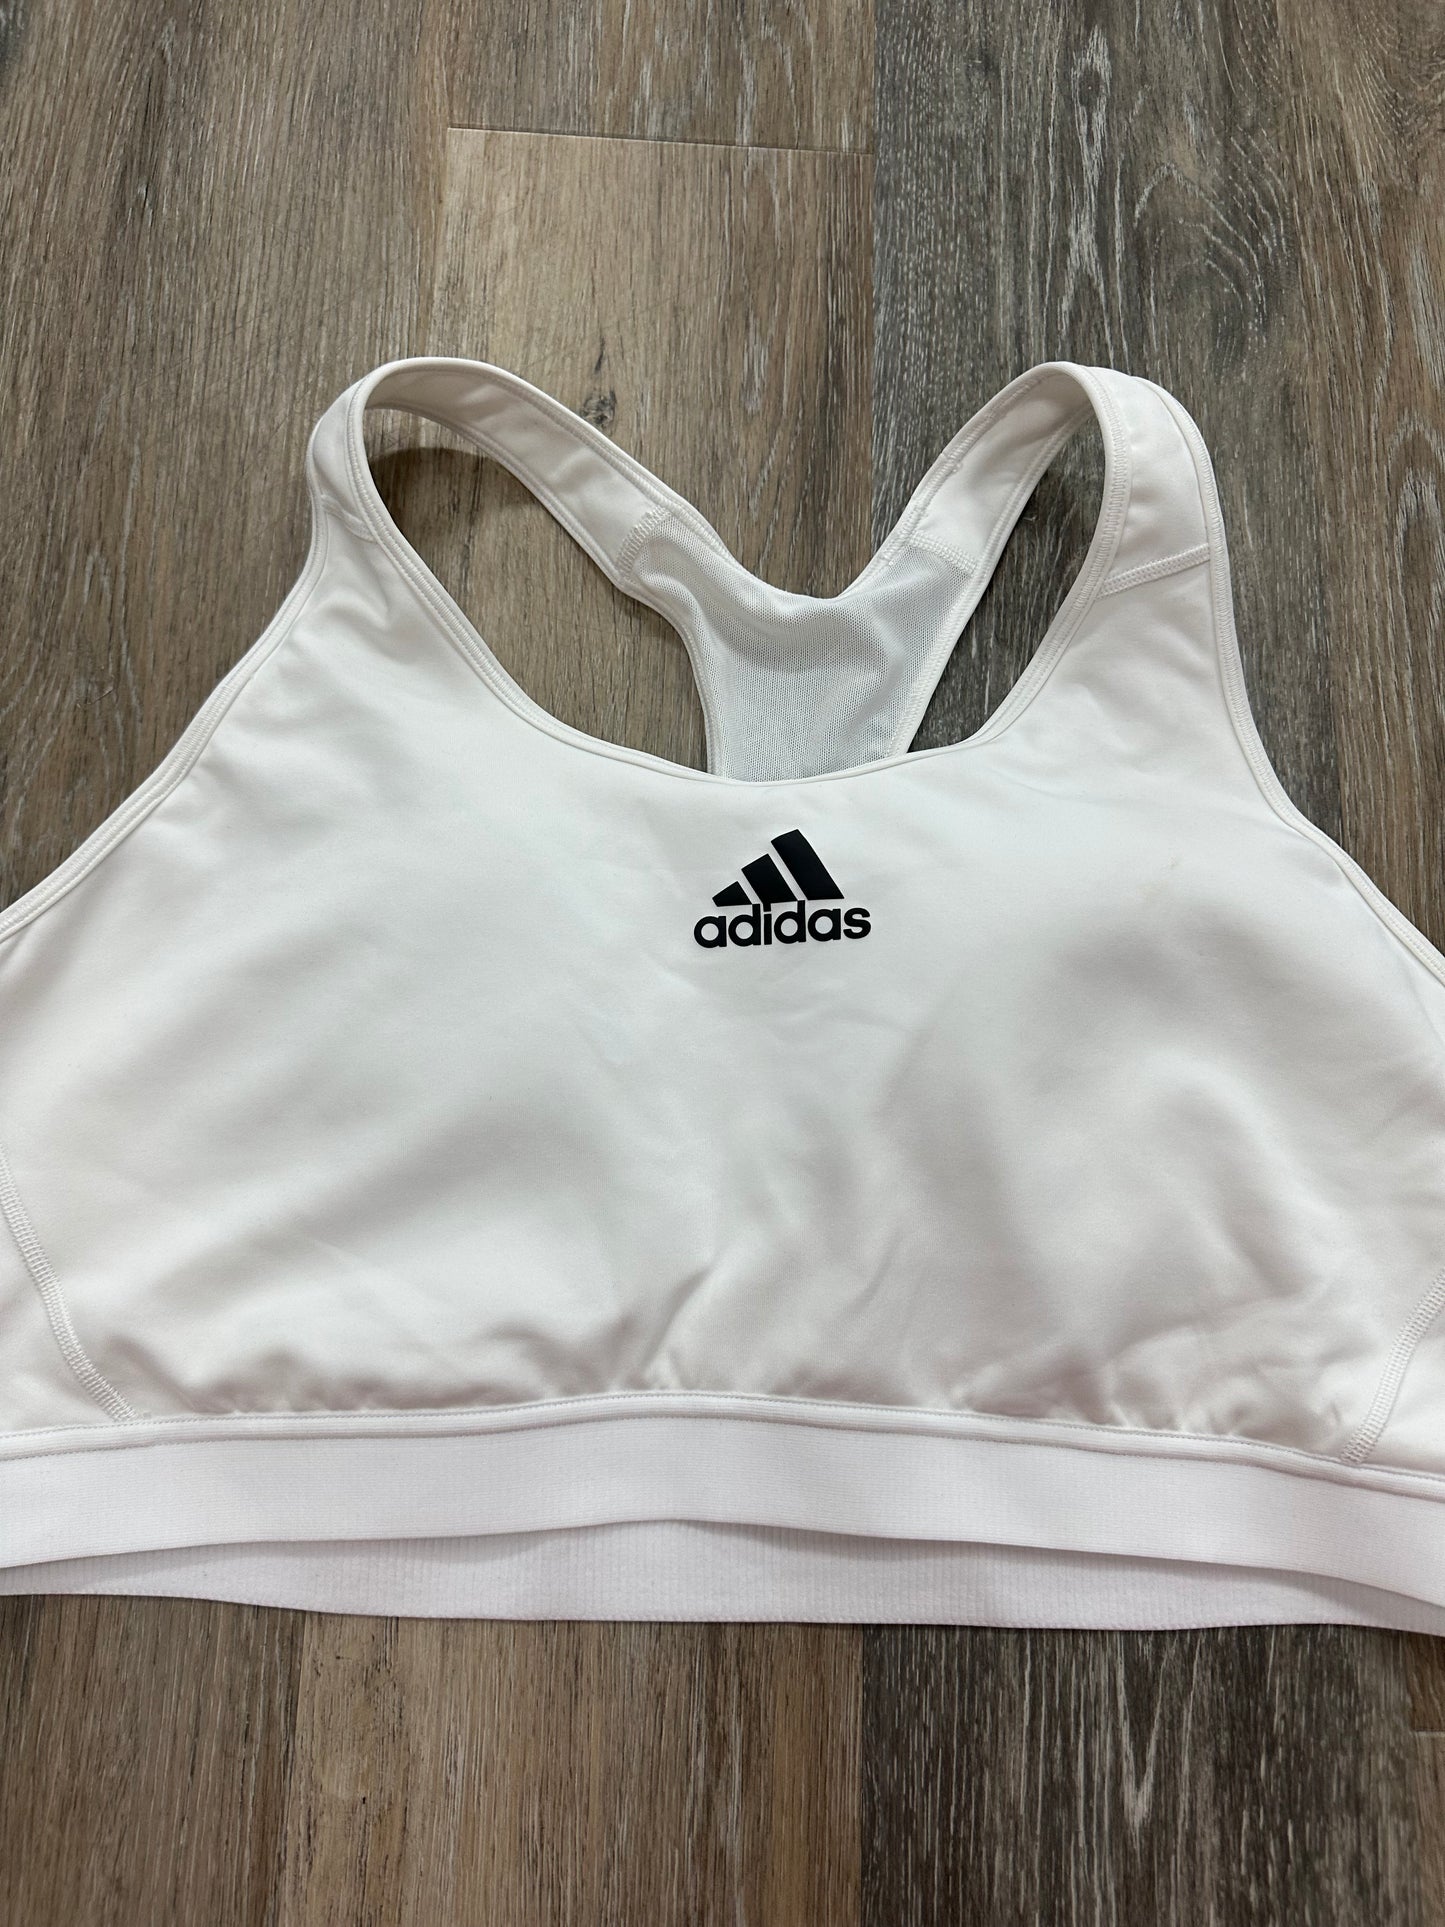 Athletic Bra By Adidas  Size: 3x